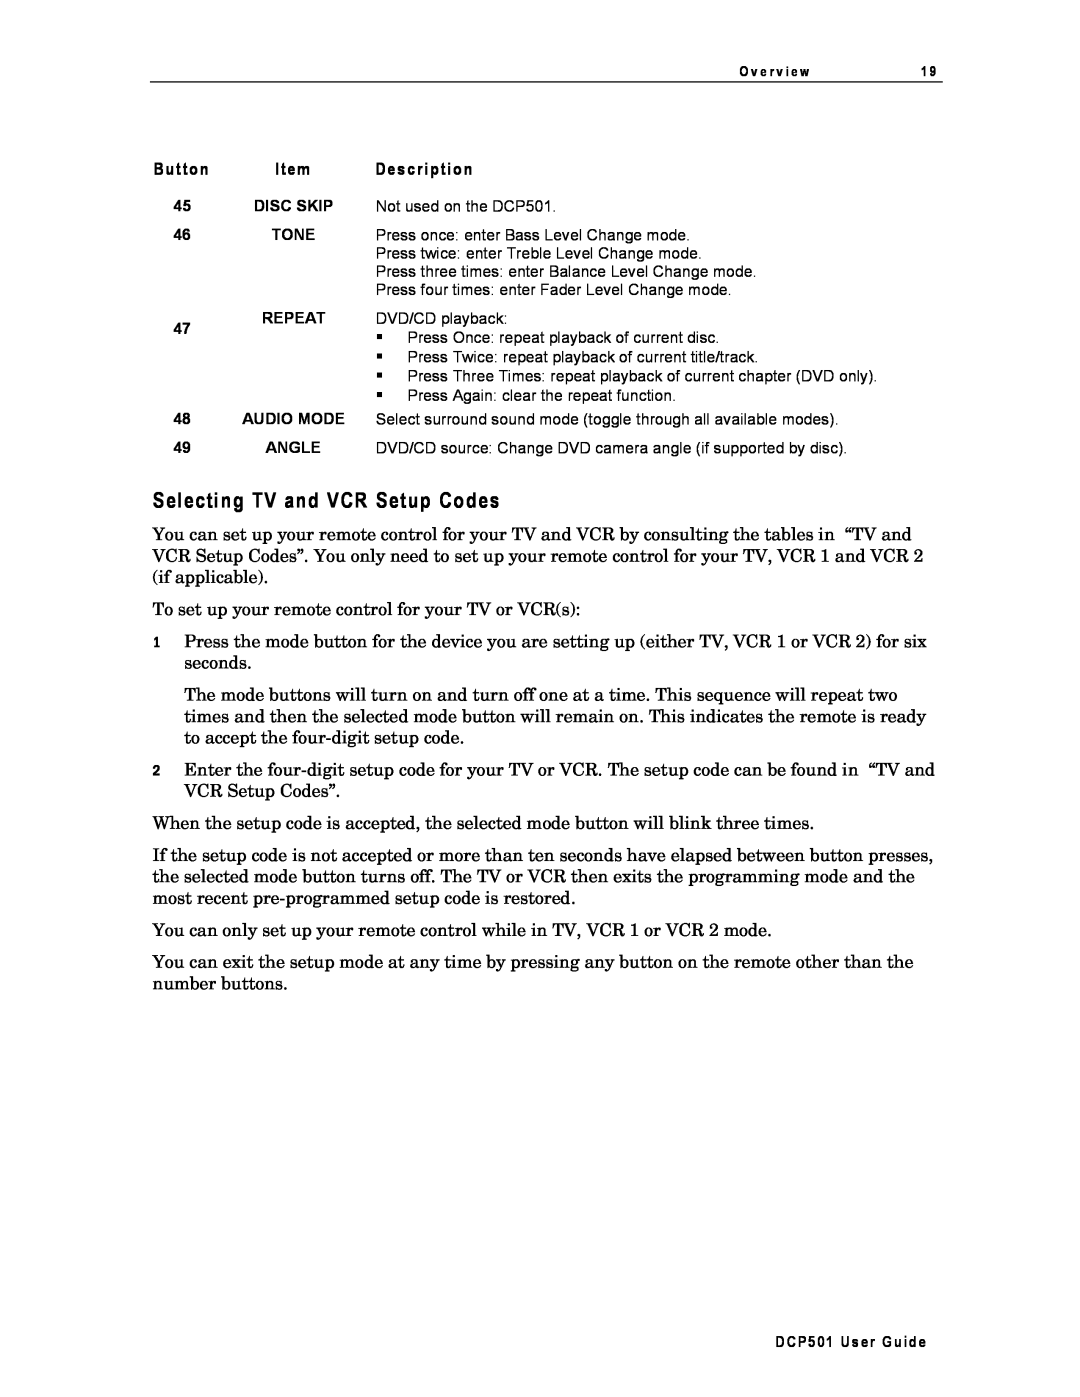 Motorola DCP501 manual Selecting TV and VCR Setup Codes, Button Item Description 